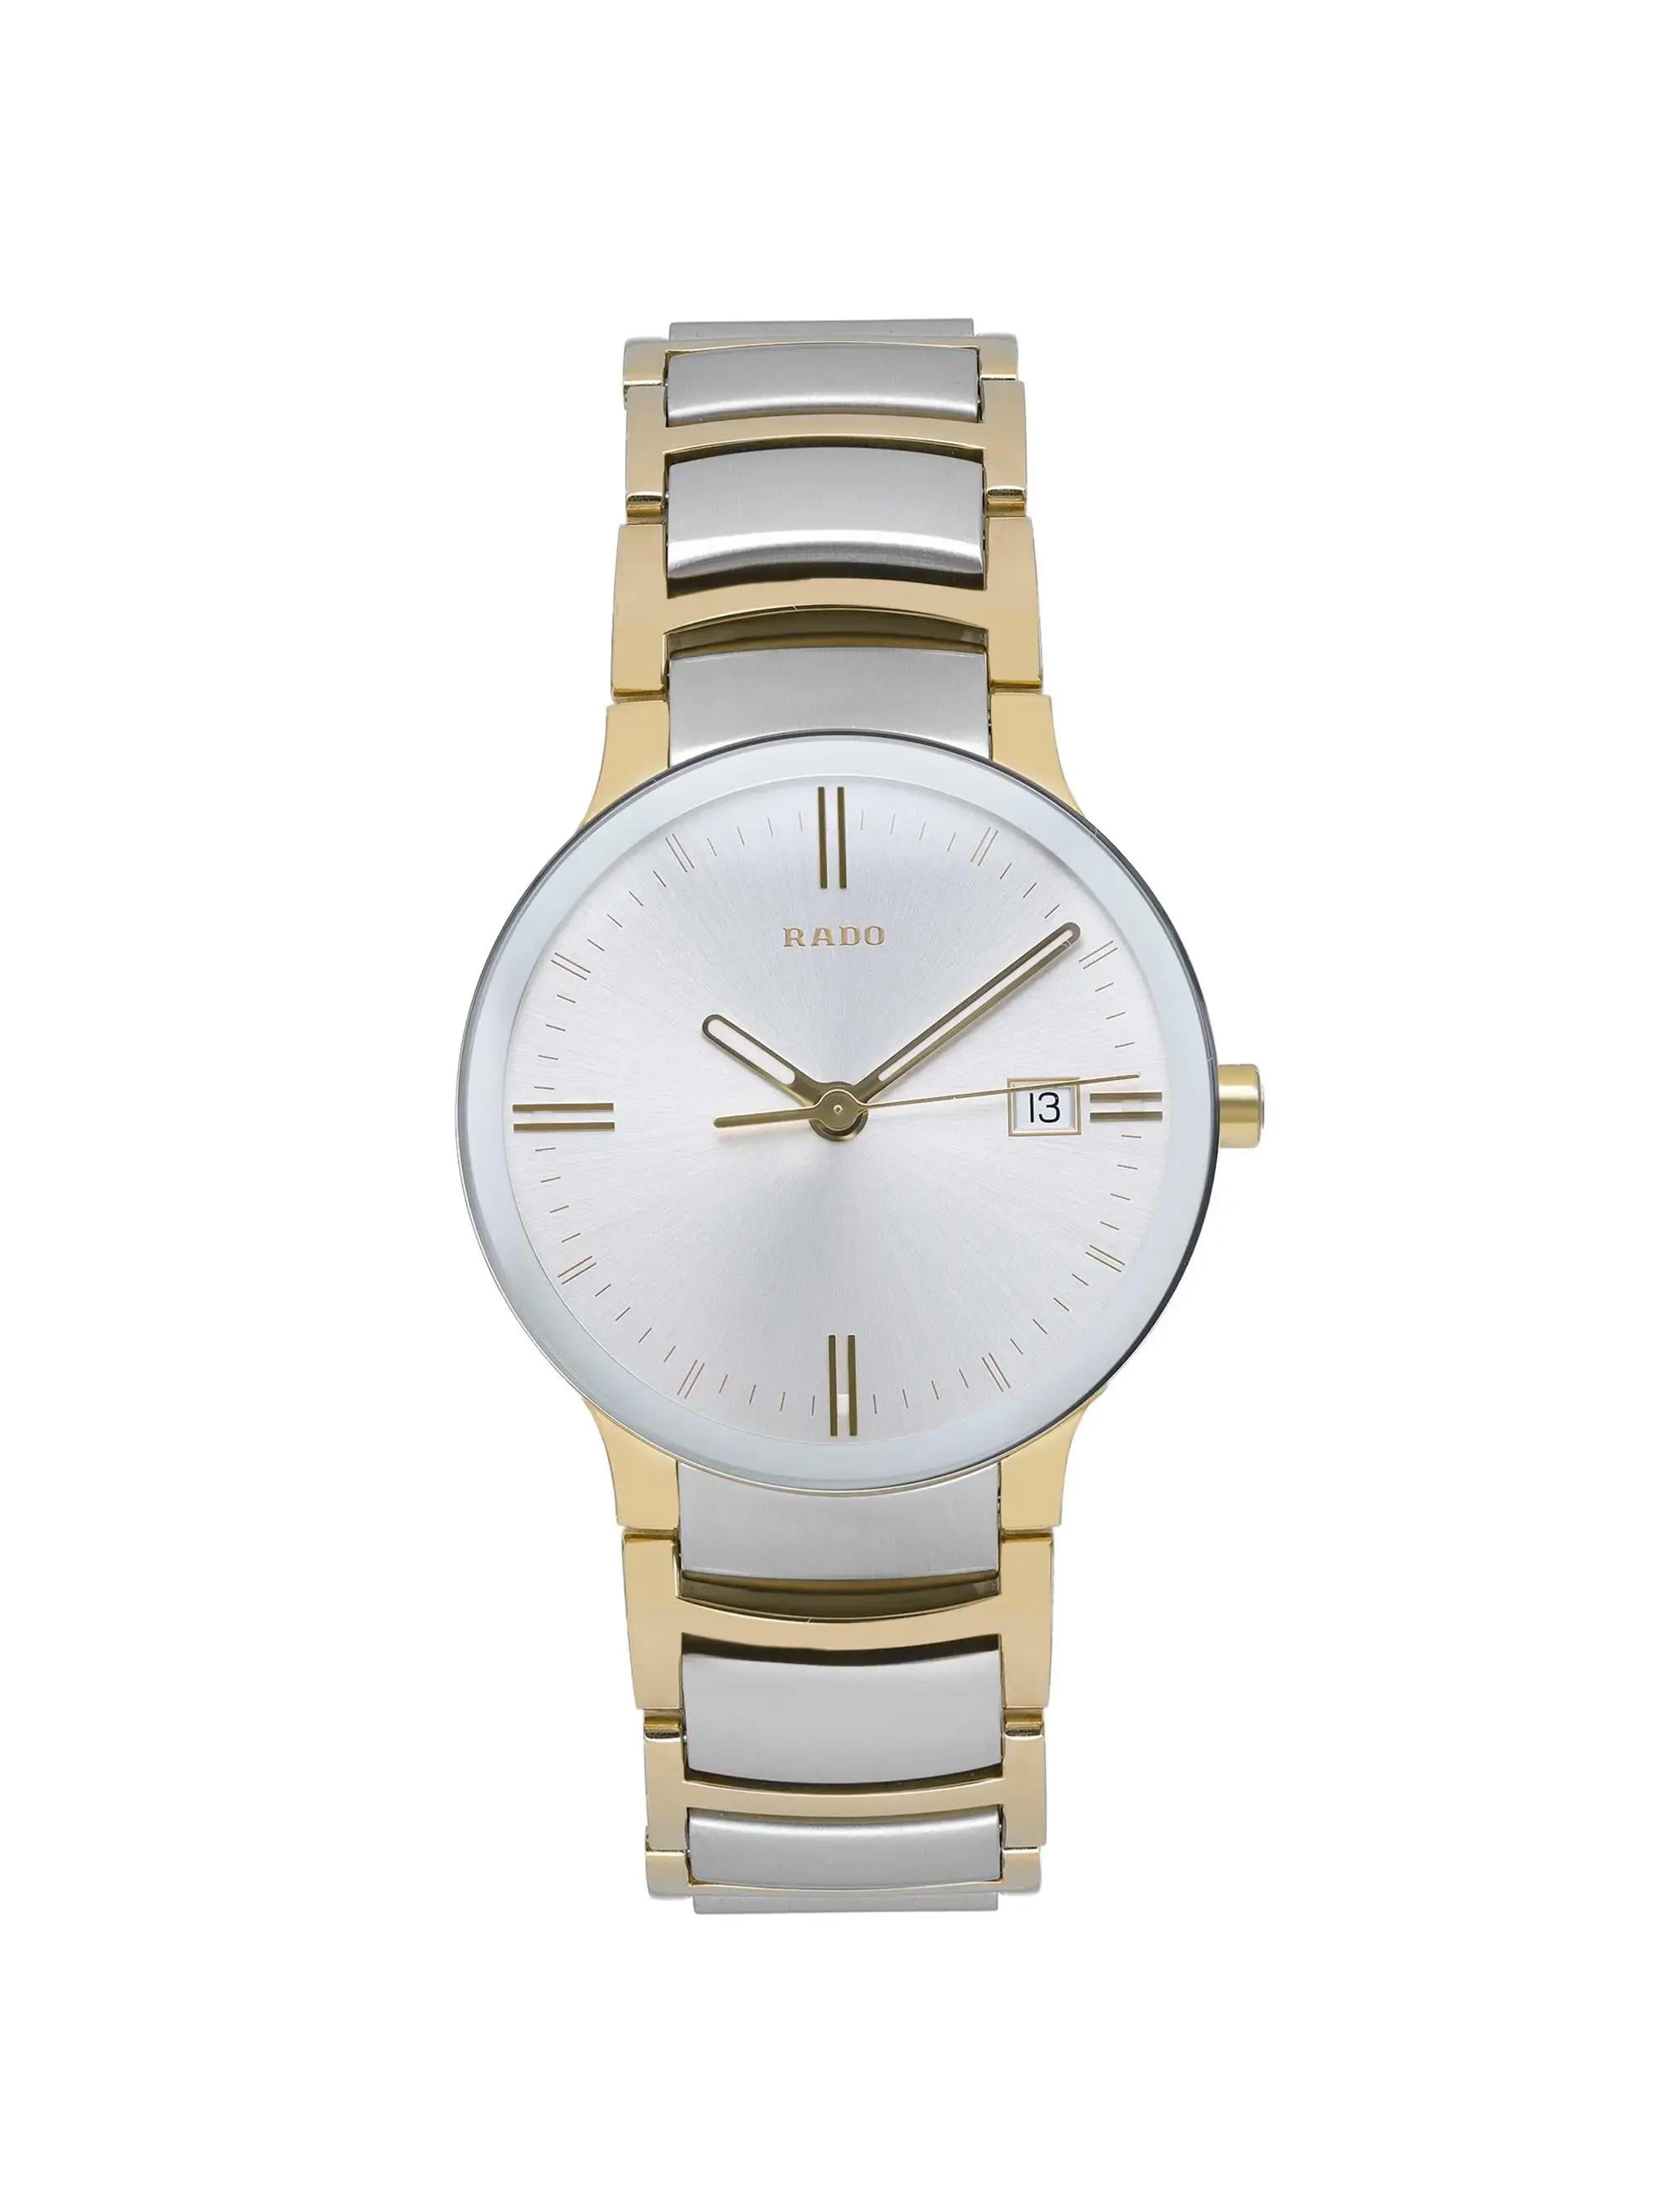 Fashion Hub on Instagram: “RADO black gold men's watch. Product - RADO watch  MOP - Cash deposit / NEFT… | Cool watches for women, Stylish watches,  Watches for men